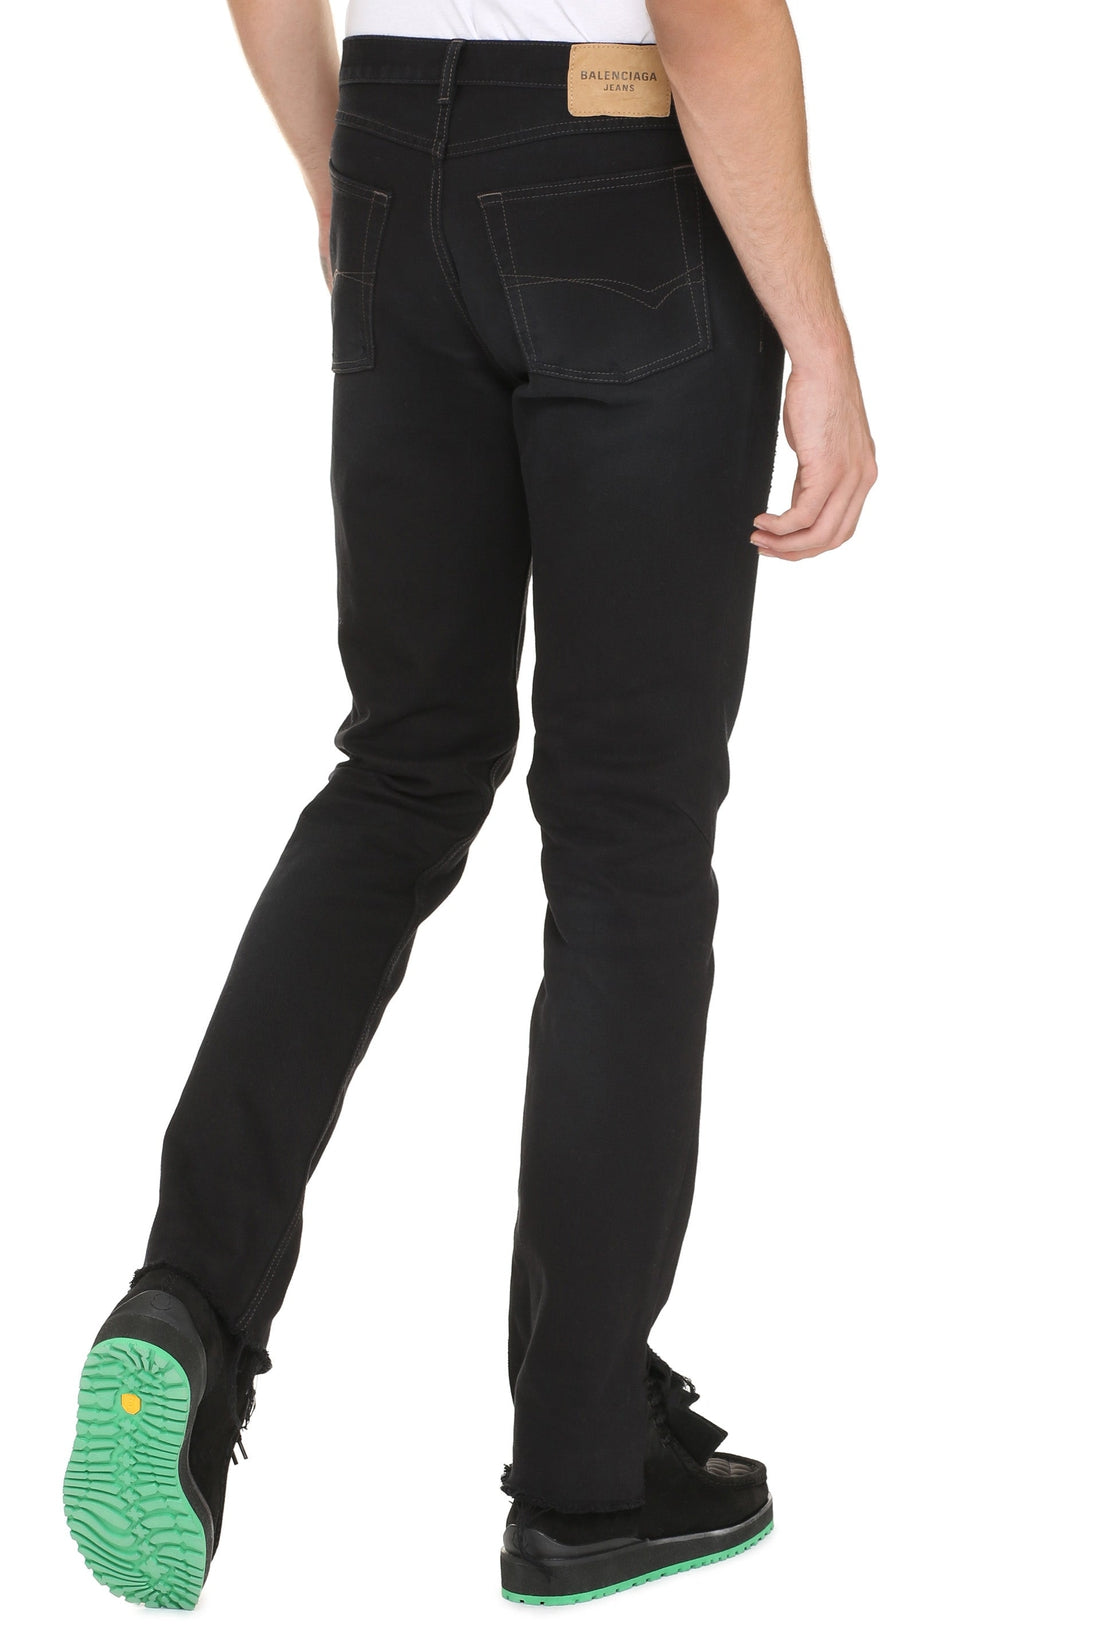 Balenciaga-OUTLET-SALE-5-pocket skinny jeans-ARCHIVIST